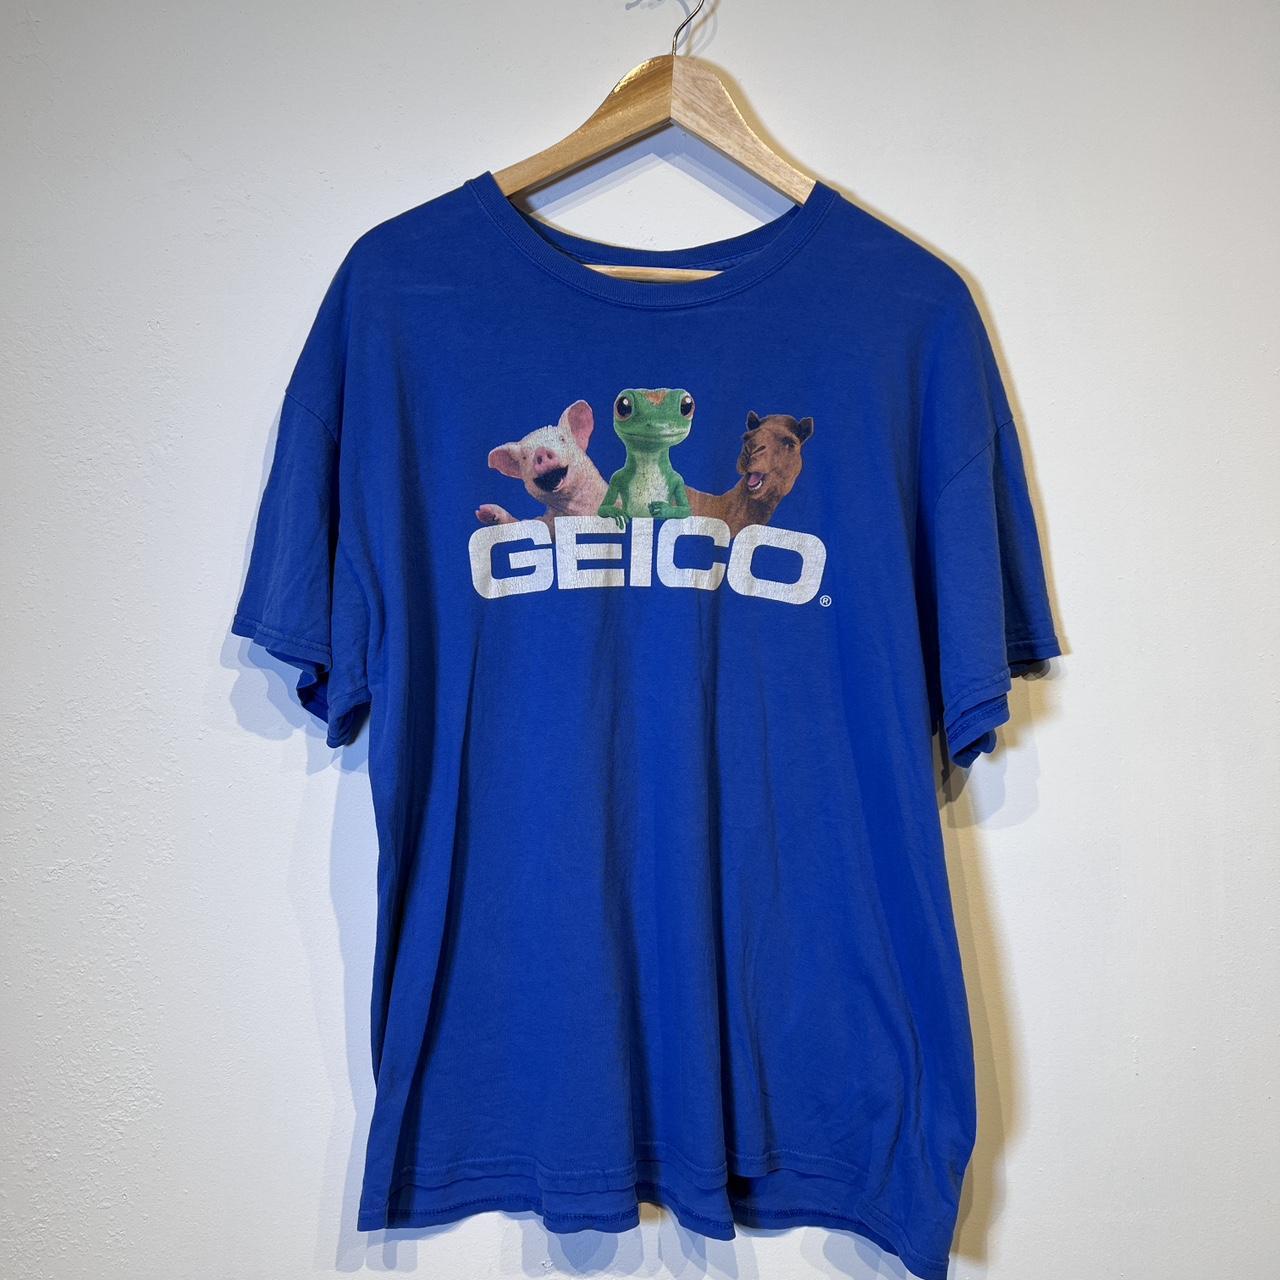 Vintage 00's LA Dodgers tie dye shirt. Ripped tag - Depop